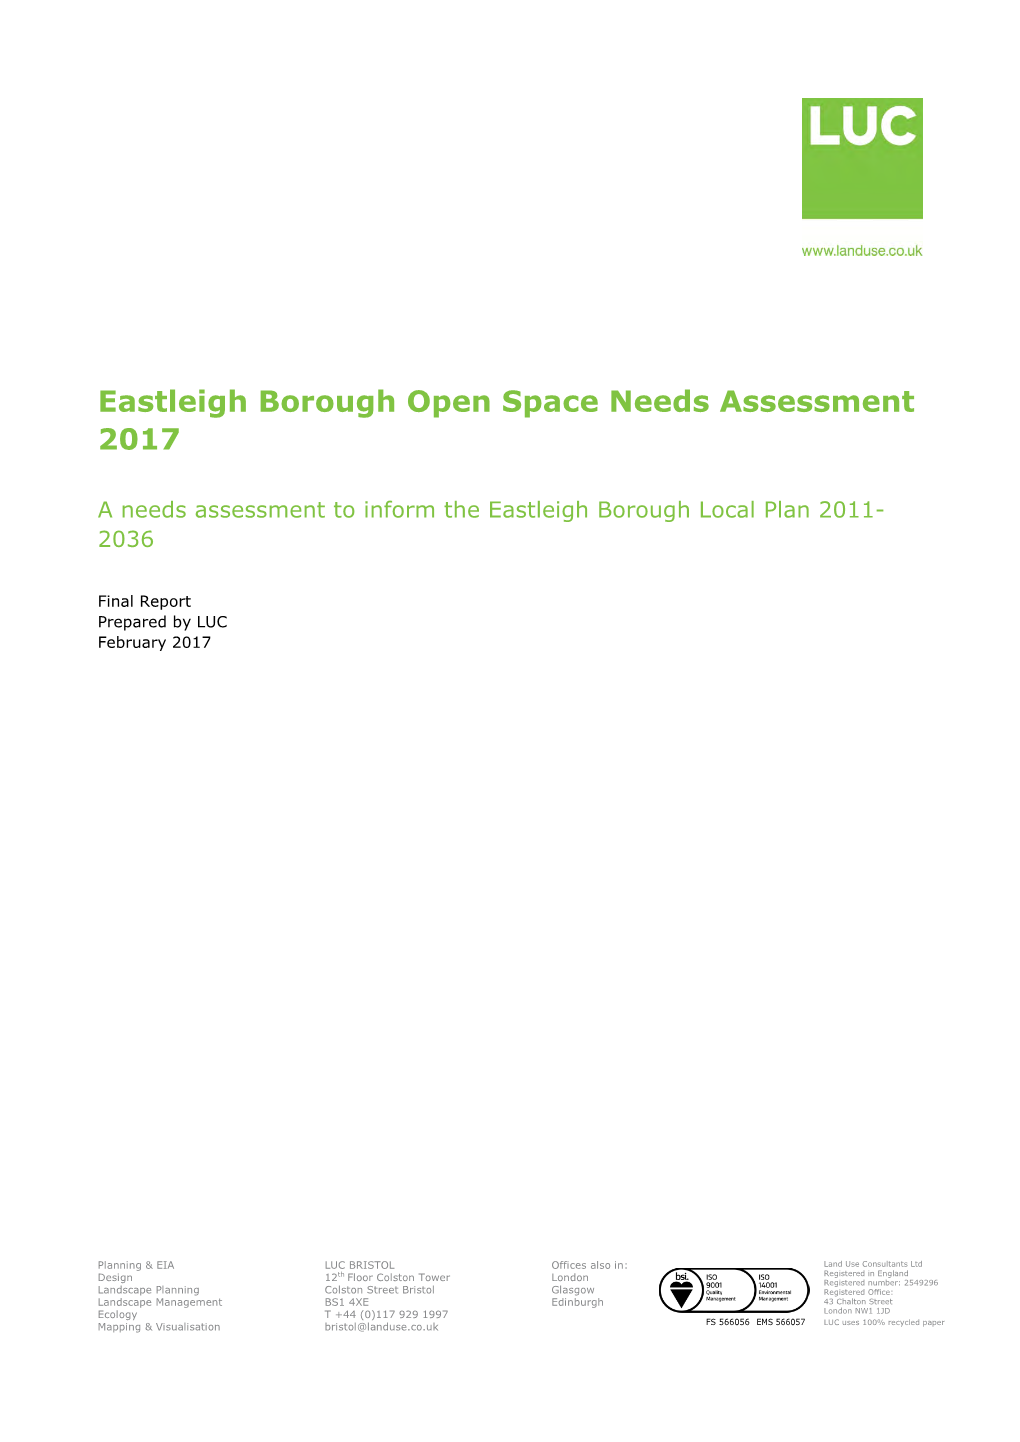 Eastleigh Borough Open Space Needs Assessment 2017